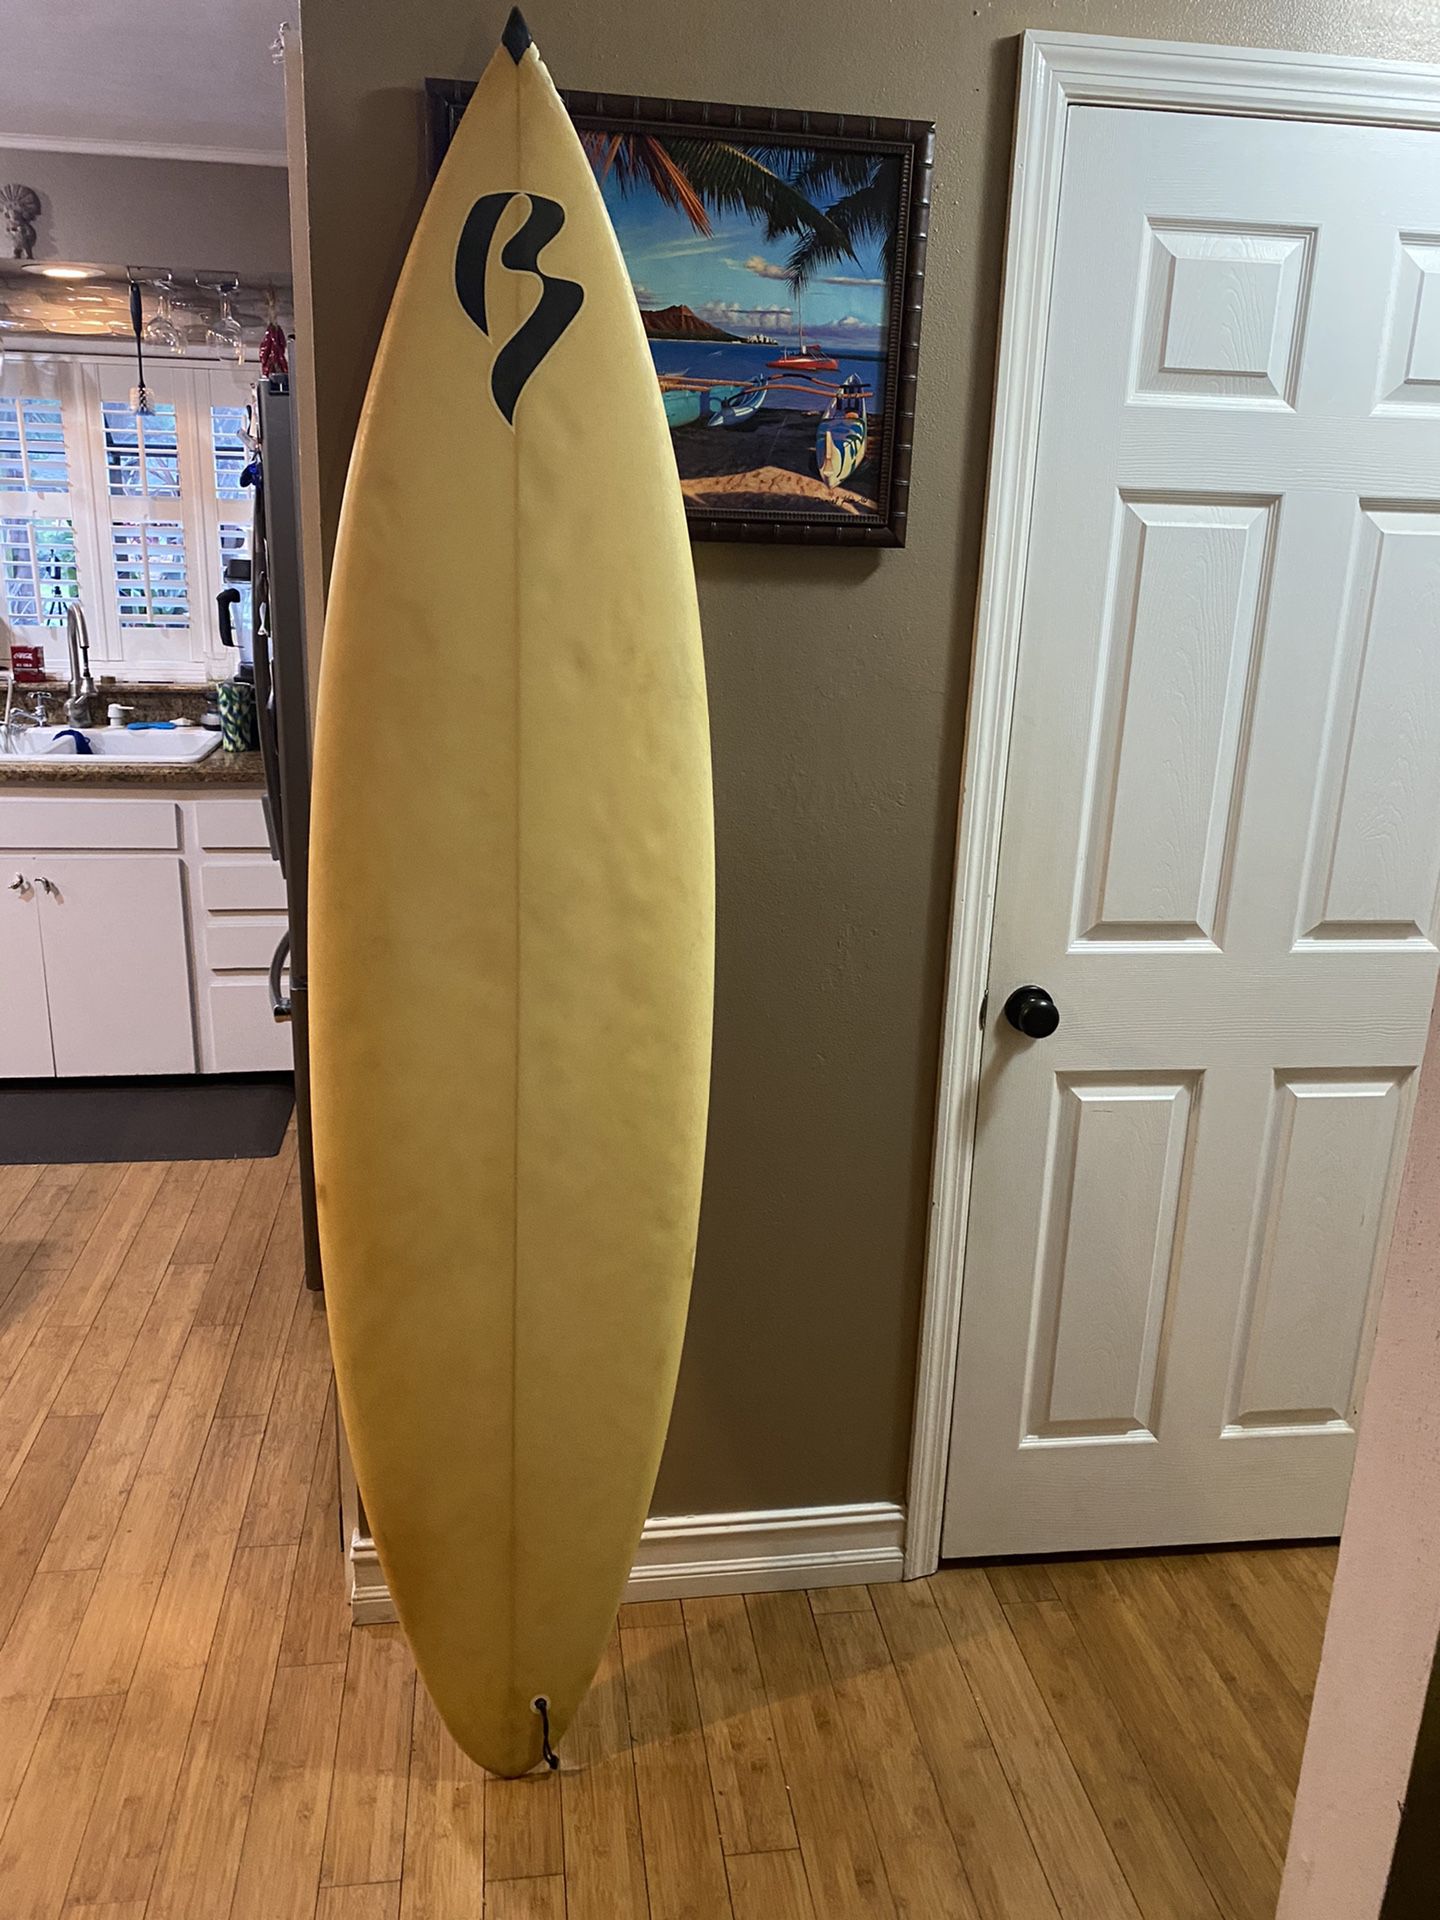 Rare Brad barros surfboard hard to find